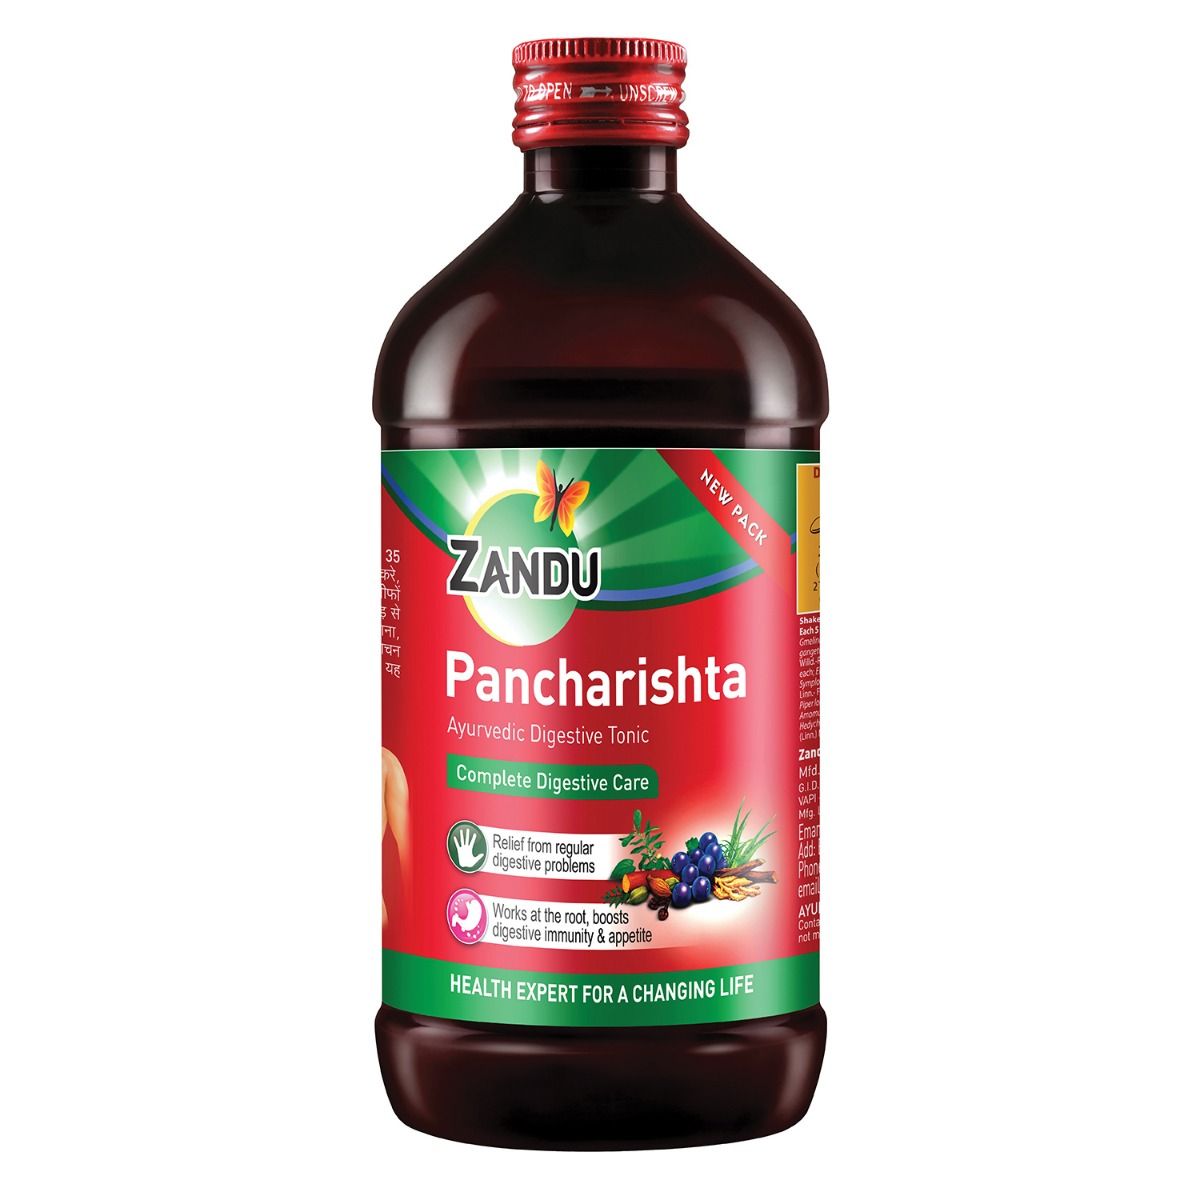 Zandu Pancharishta Ayurvedic Digestive Tonic, 650 ml, Pack of 1 